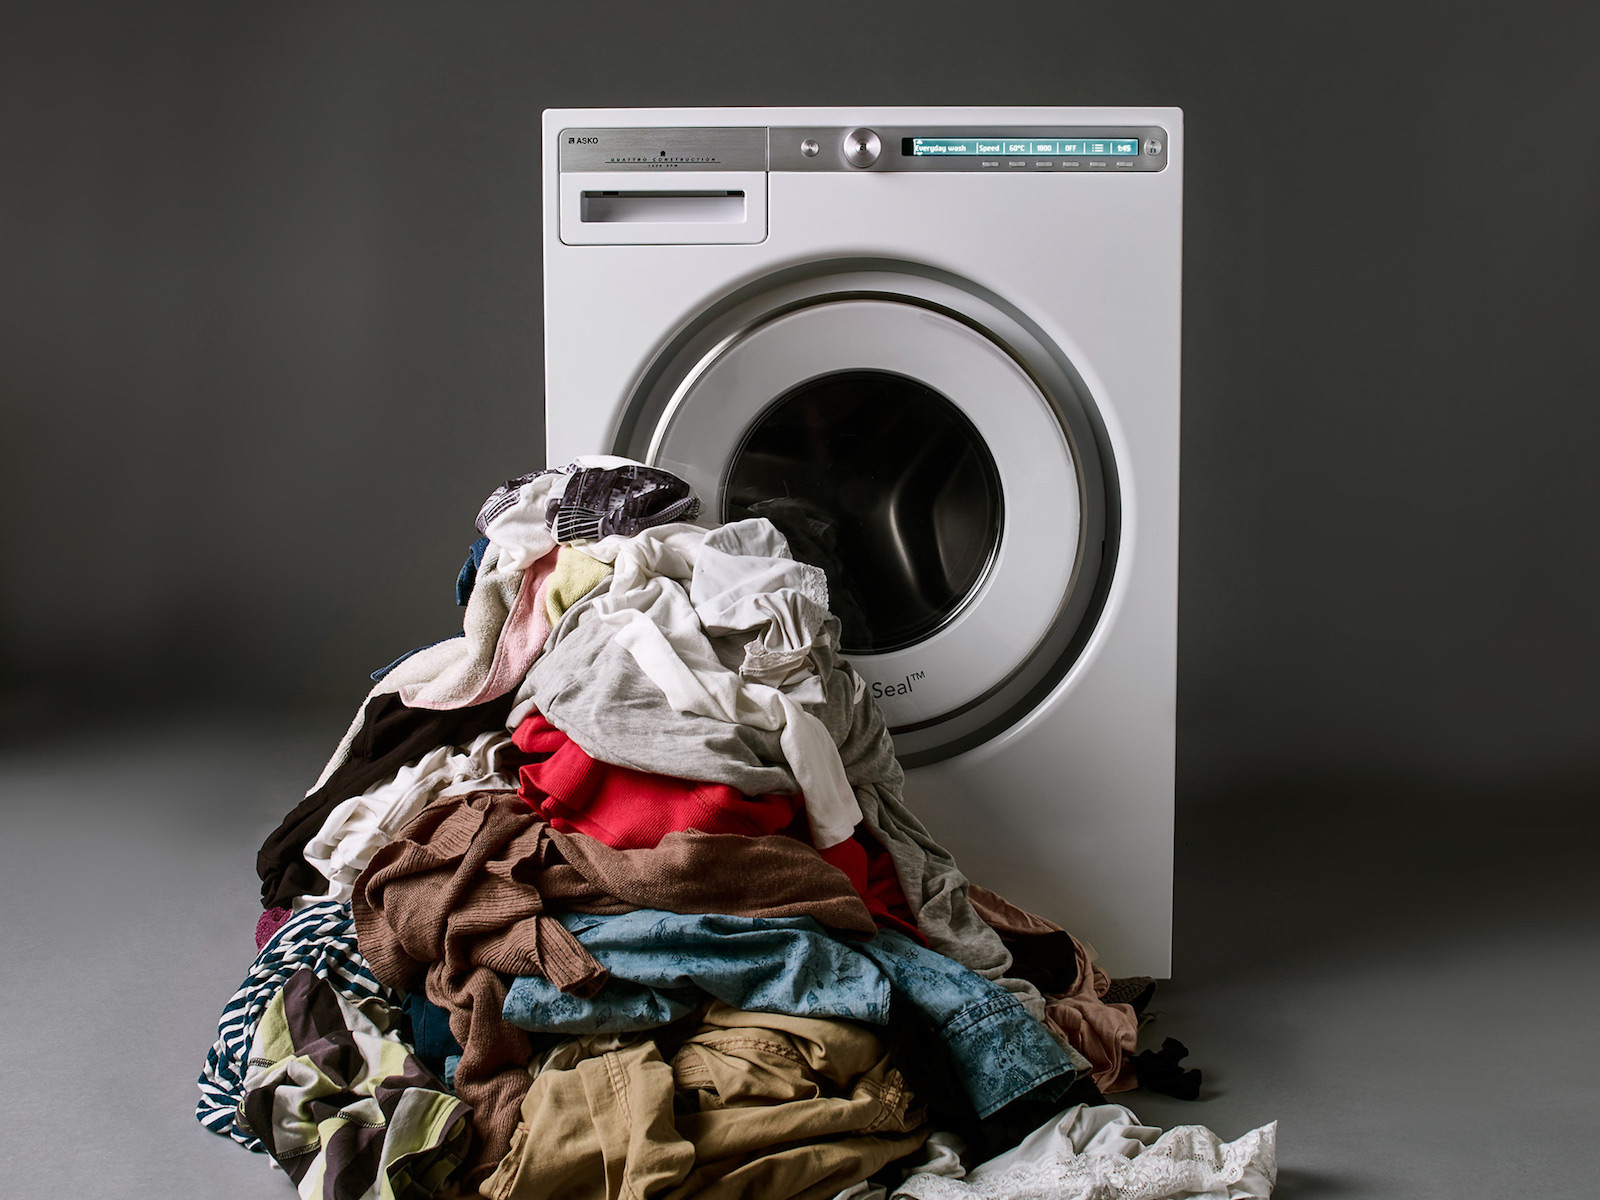 ASKO-Laundry-Washing-Machines-Programs-Washing-programmes-for-all-kinds-of-laundry-resized.jpg